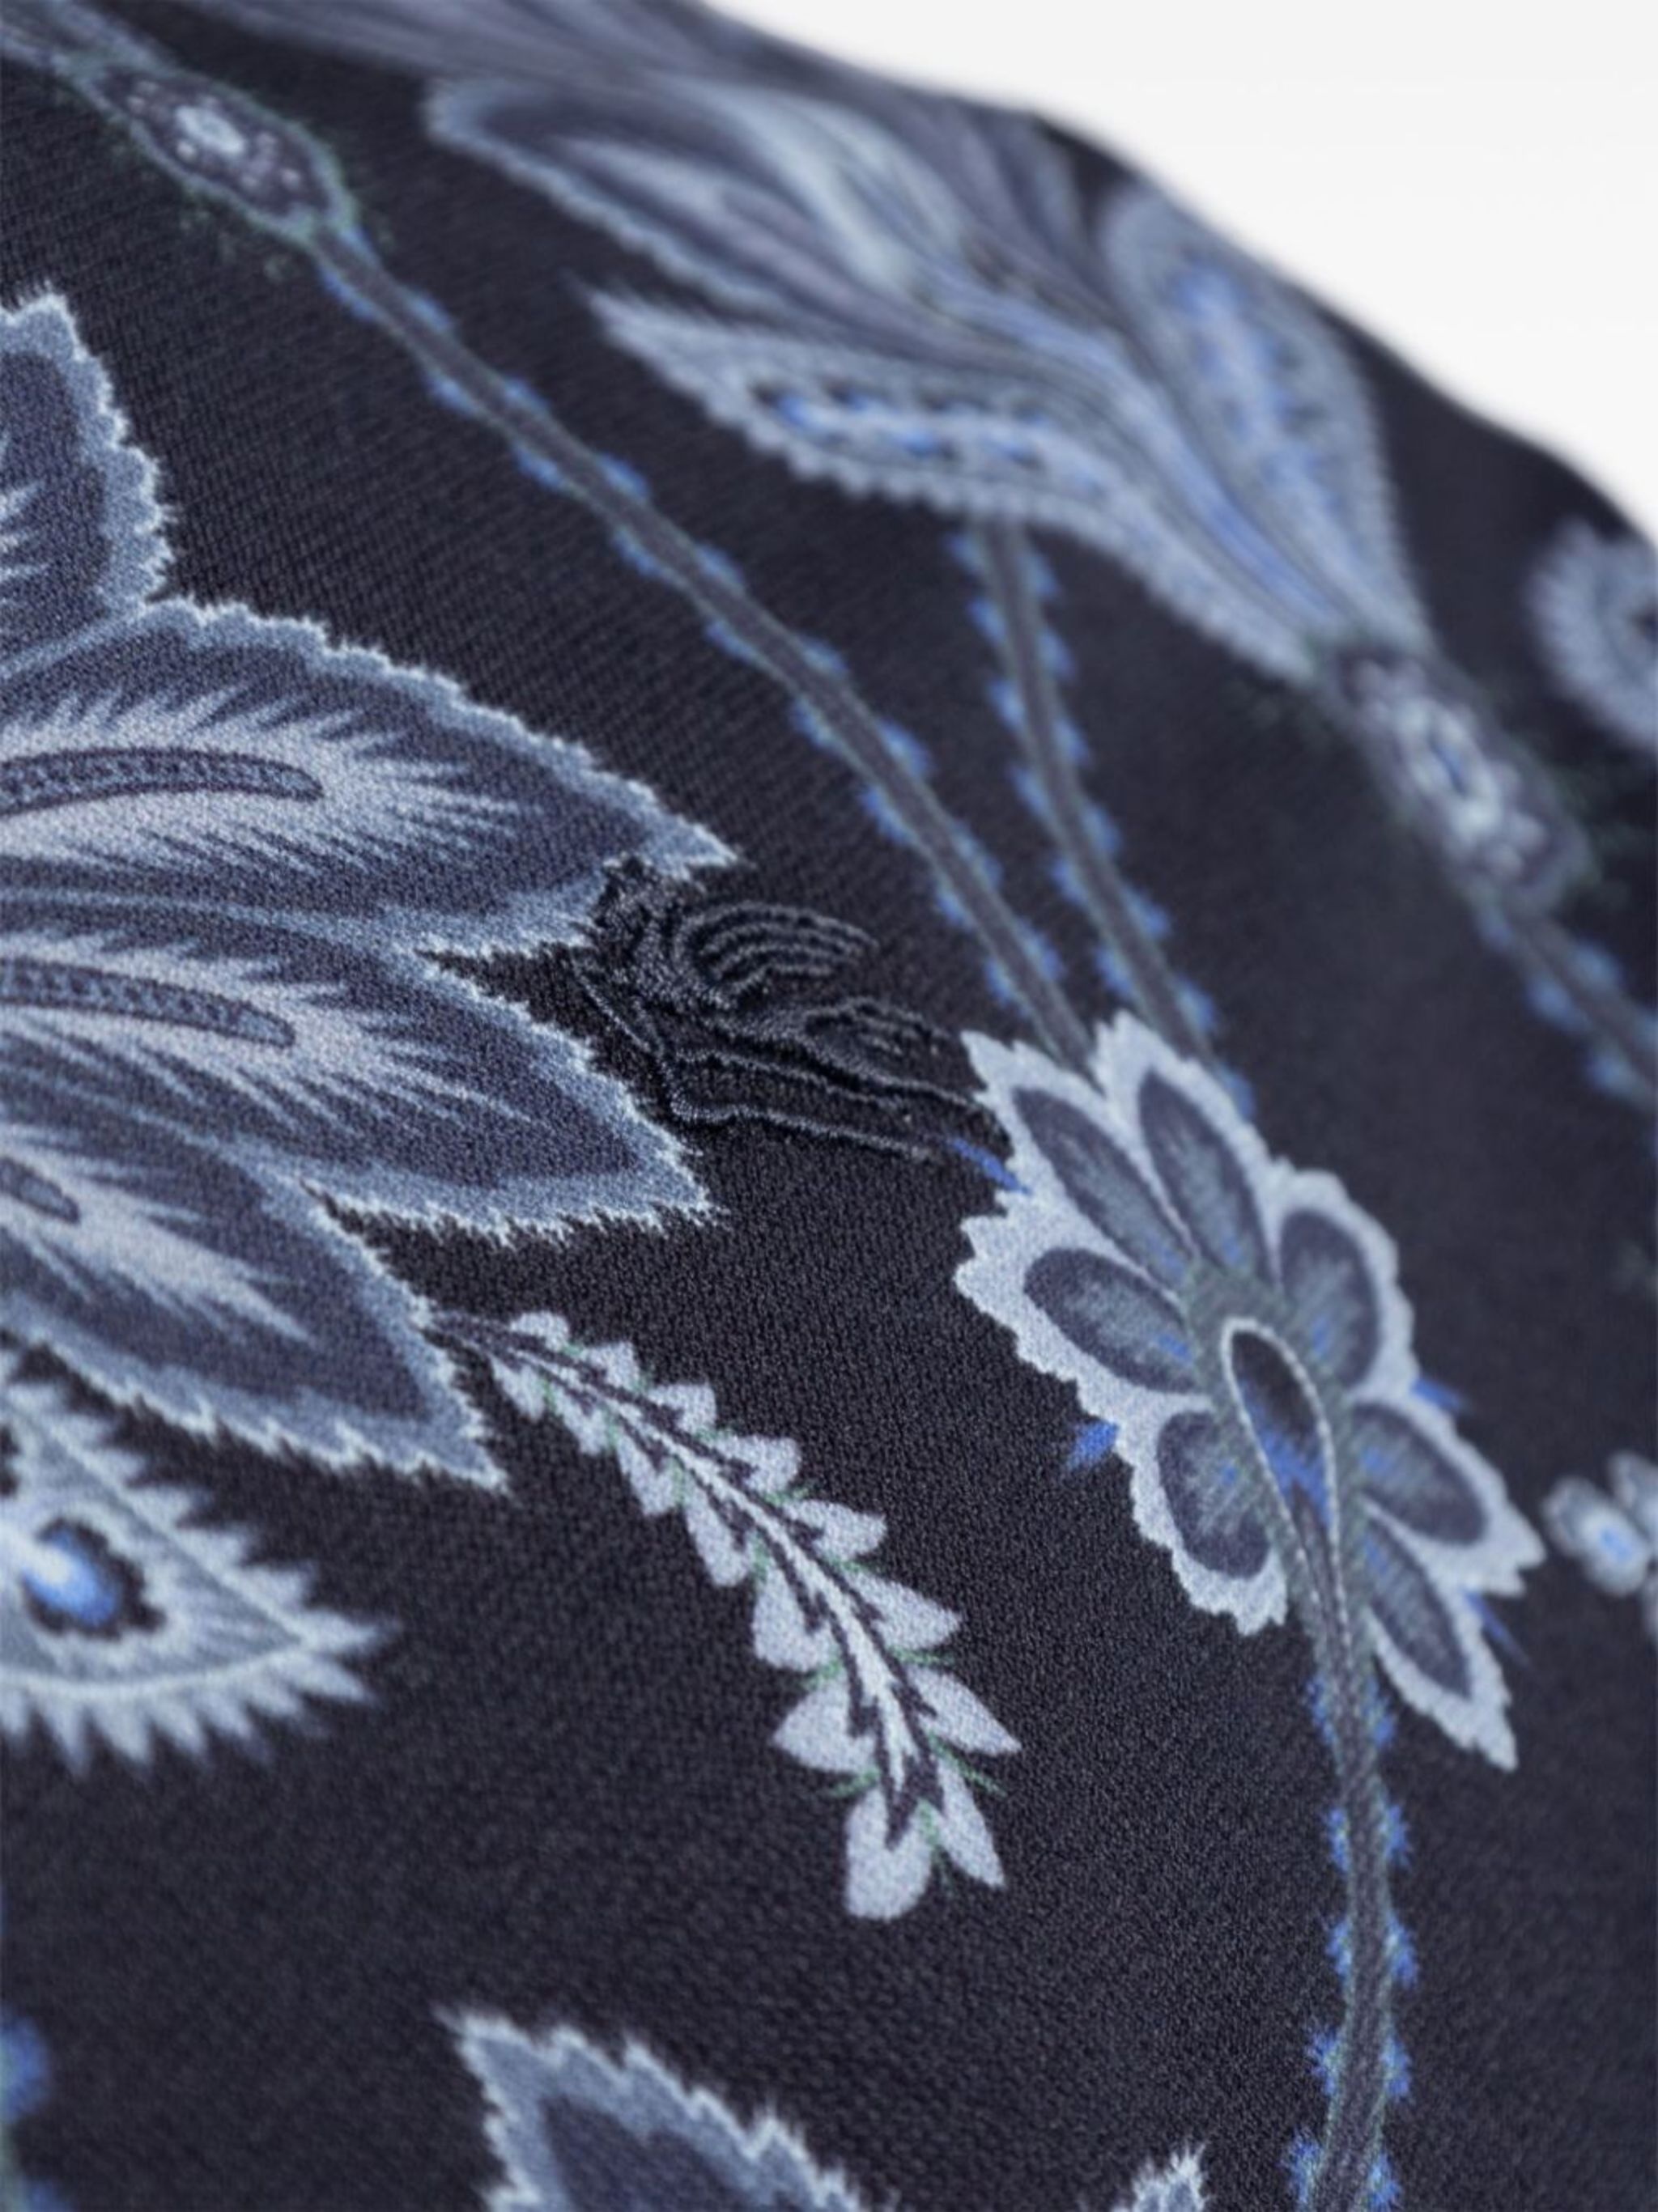 botanical-print cotton shirt - 5